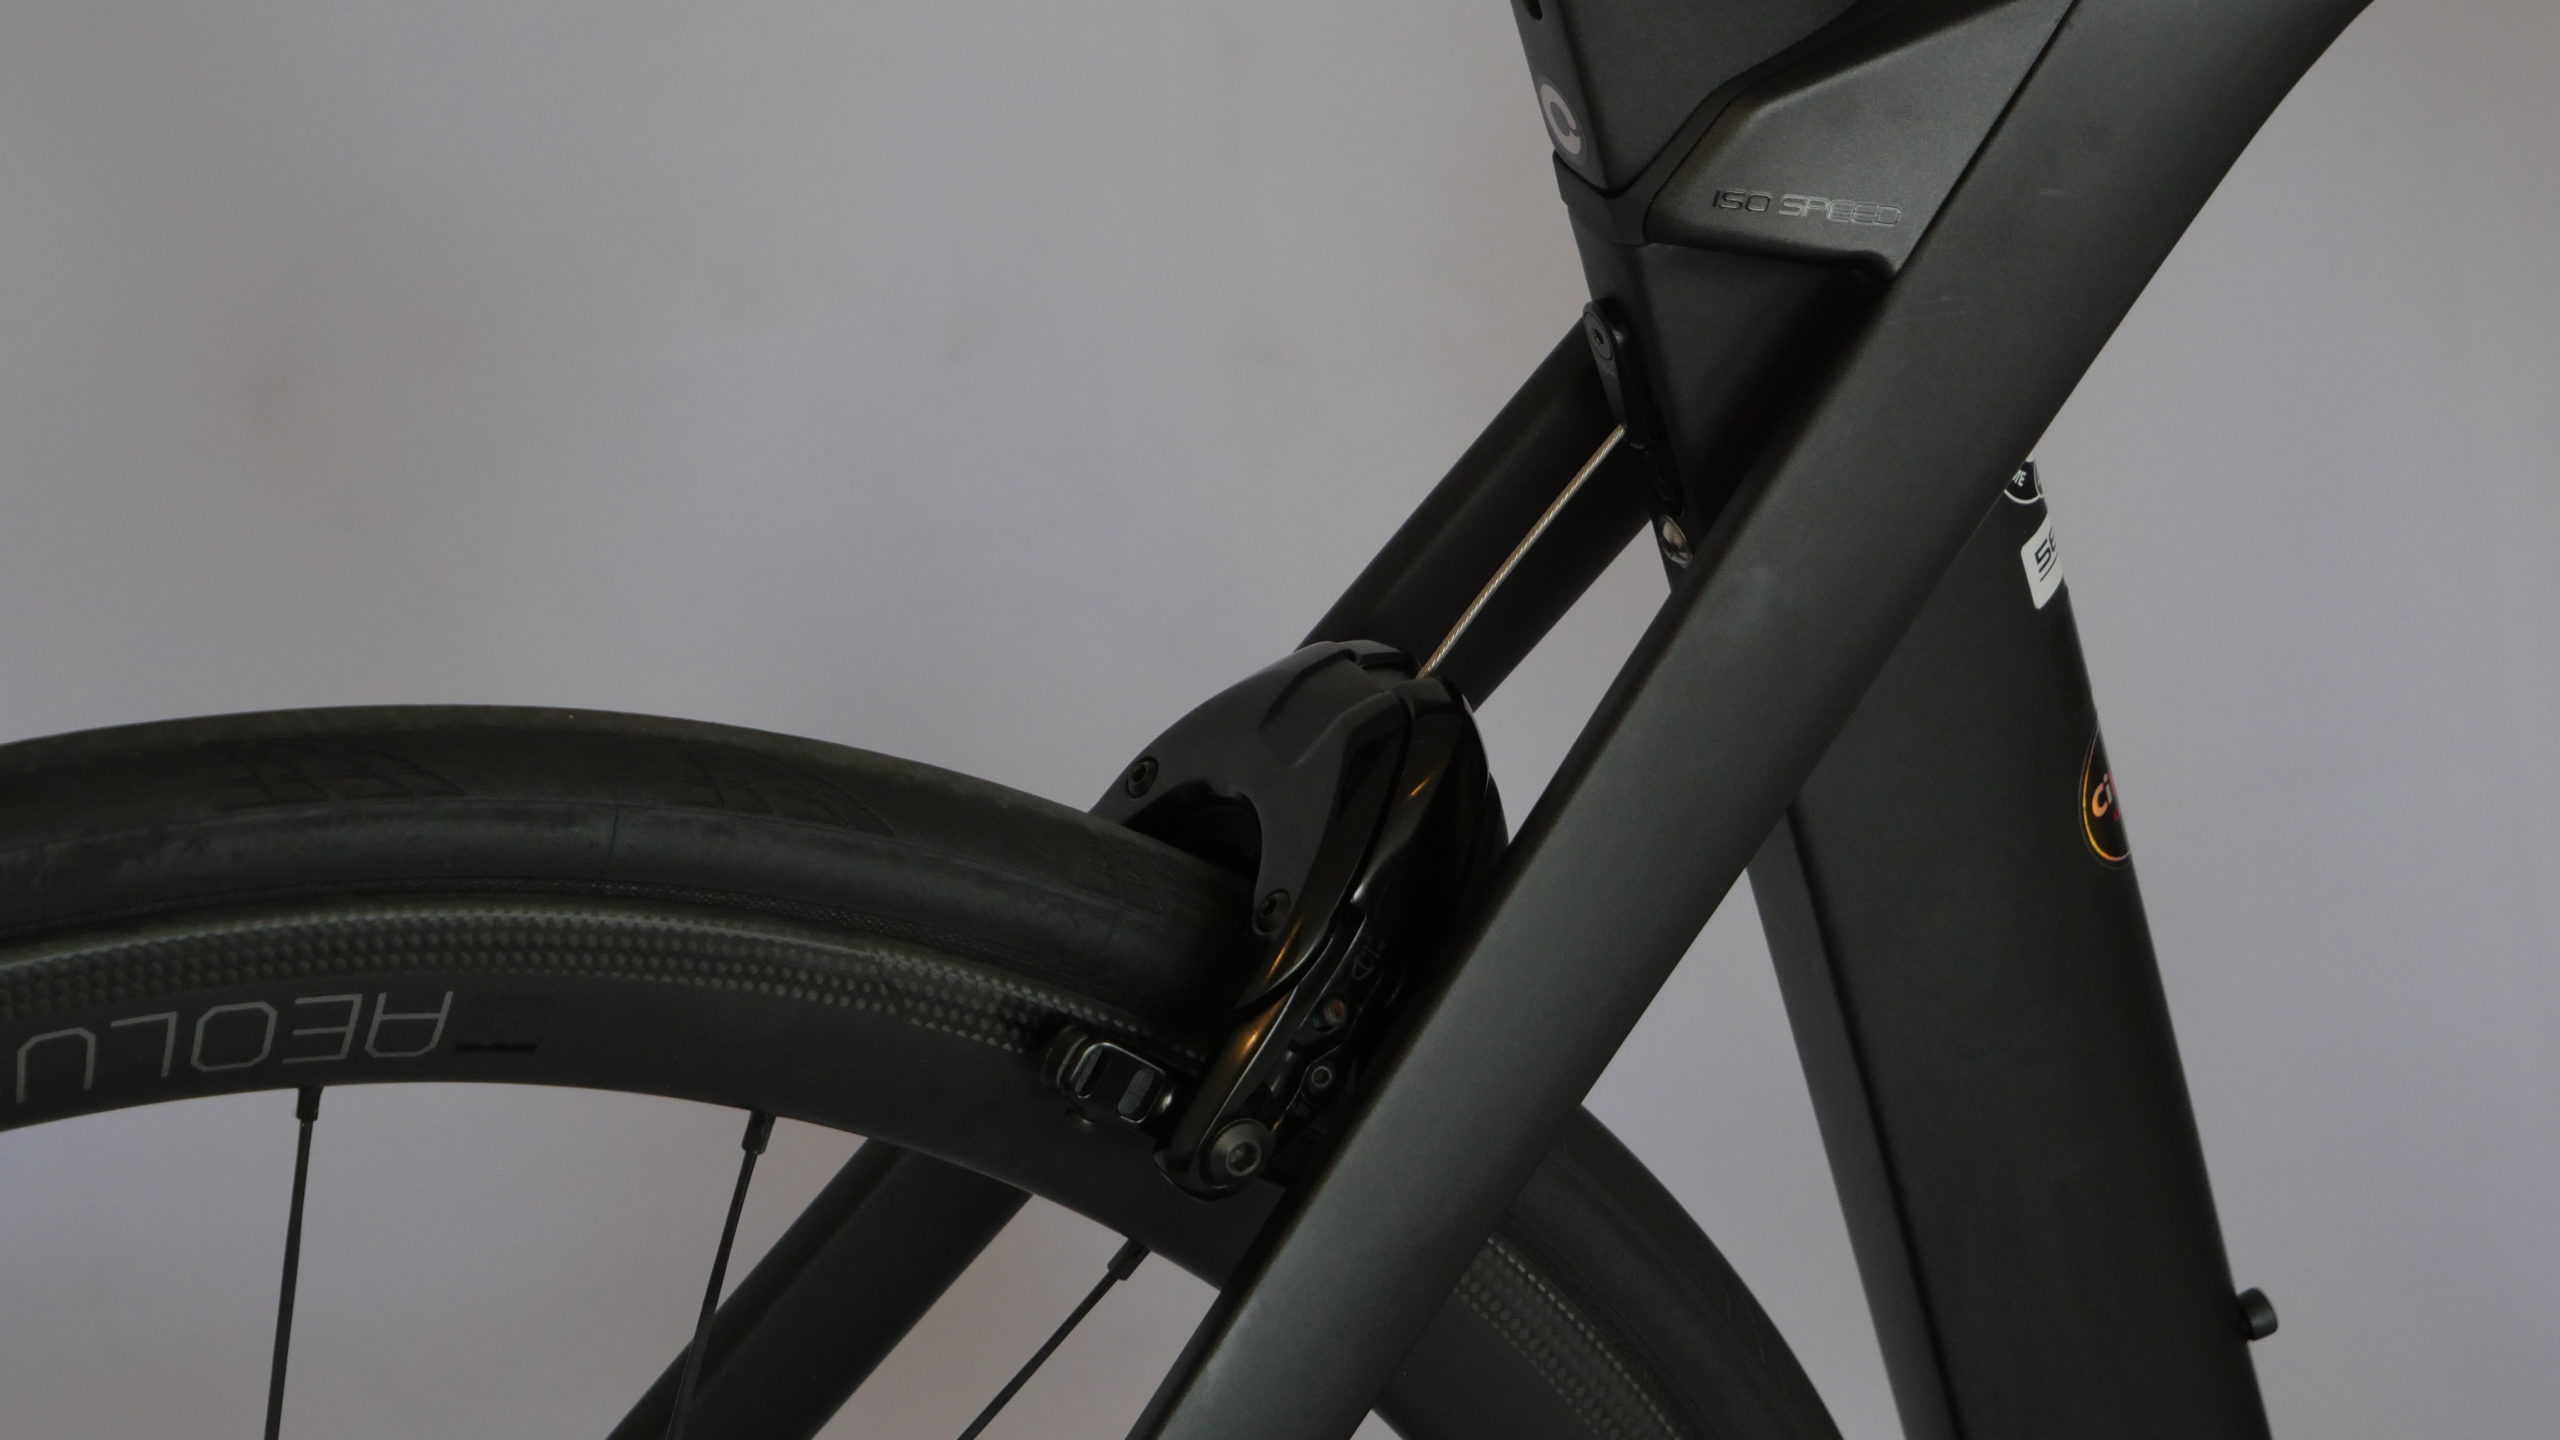 Rennrad Trek Madone SLR 6 Shimano Ultegra Schwarz / attributes.colorMarketing.matte black